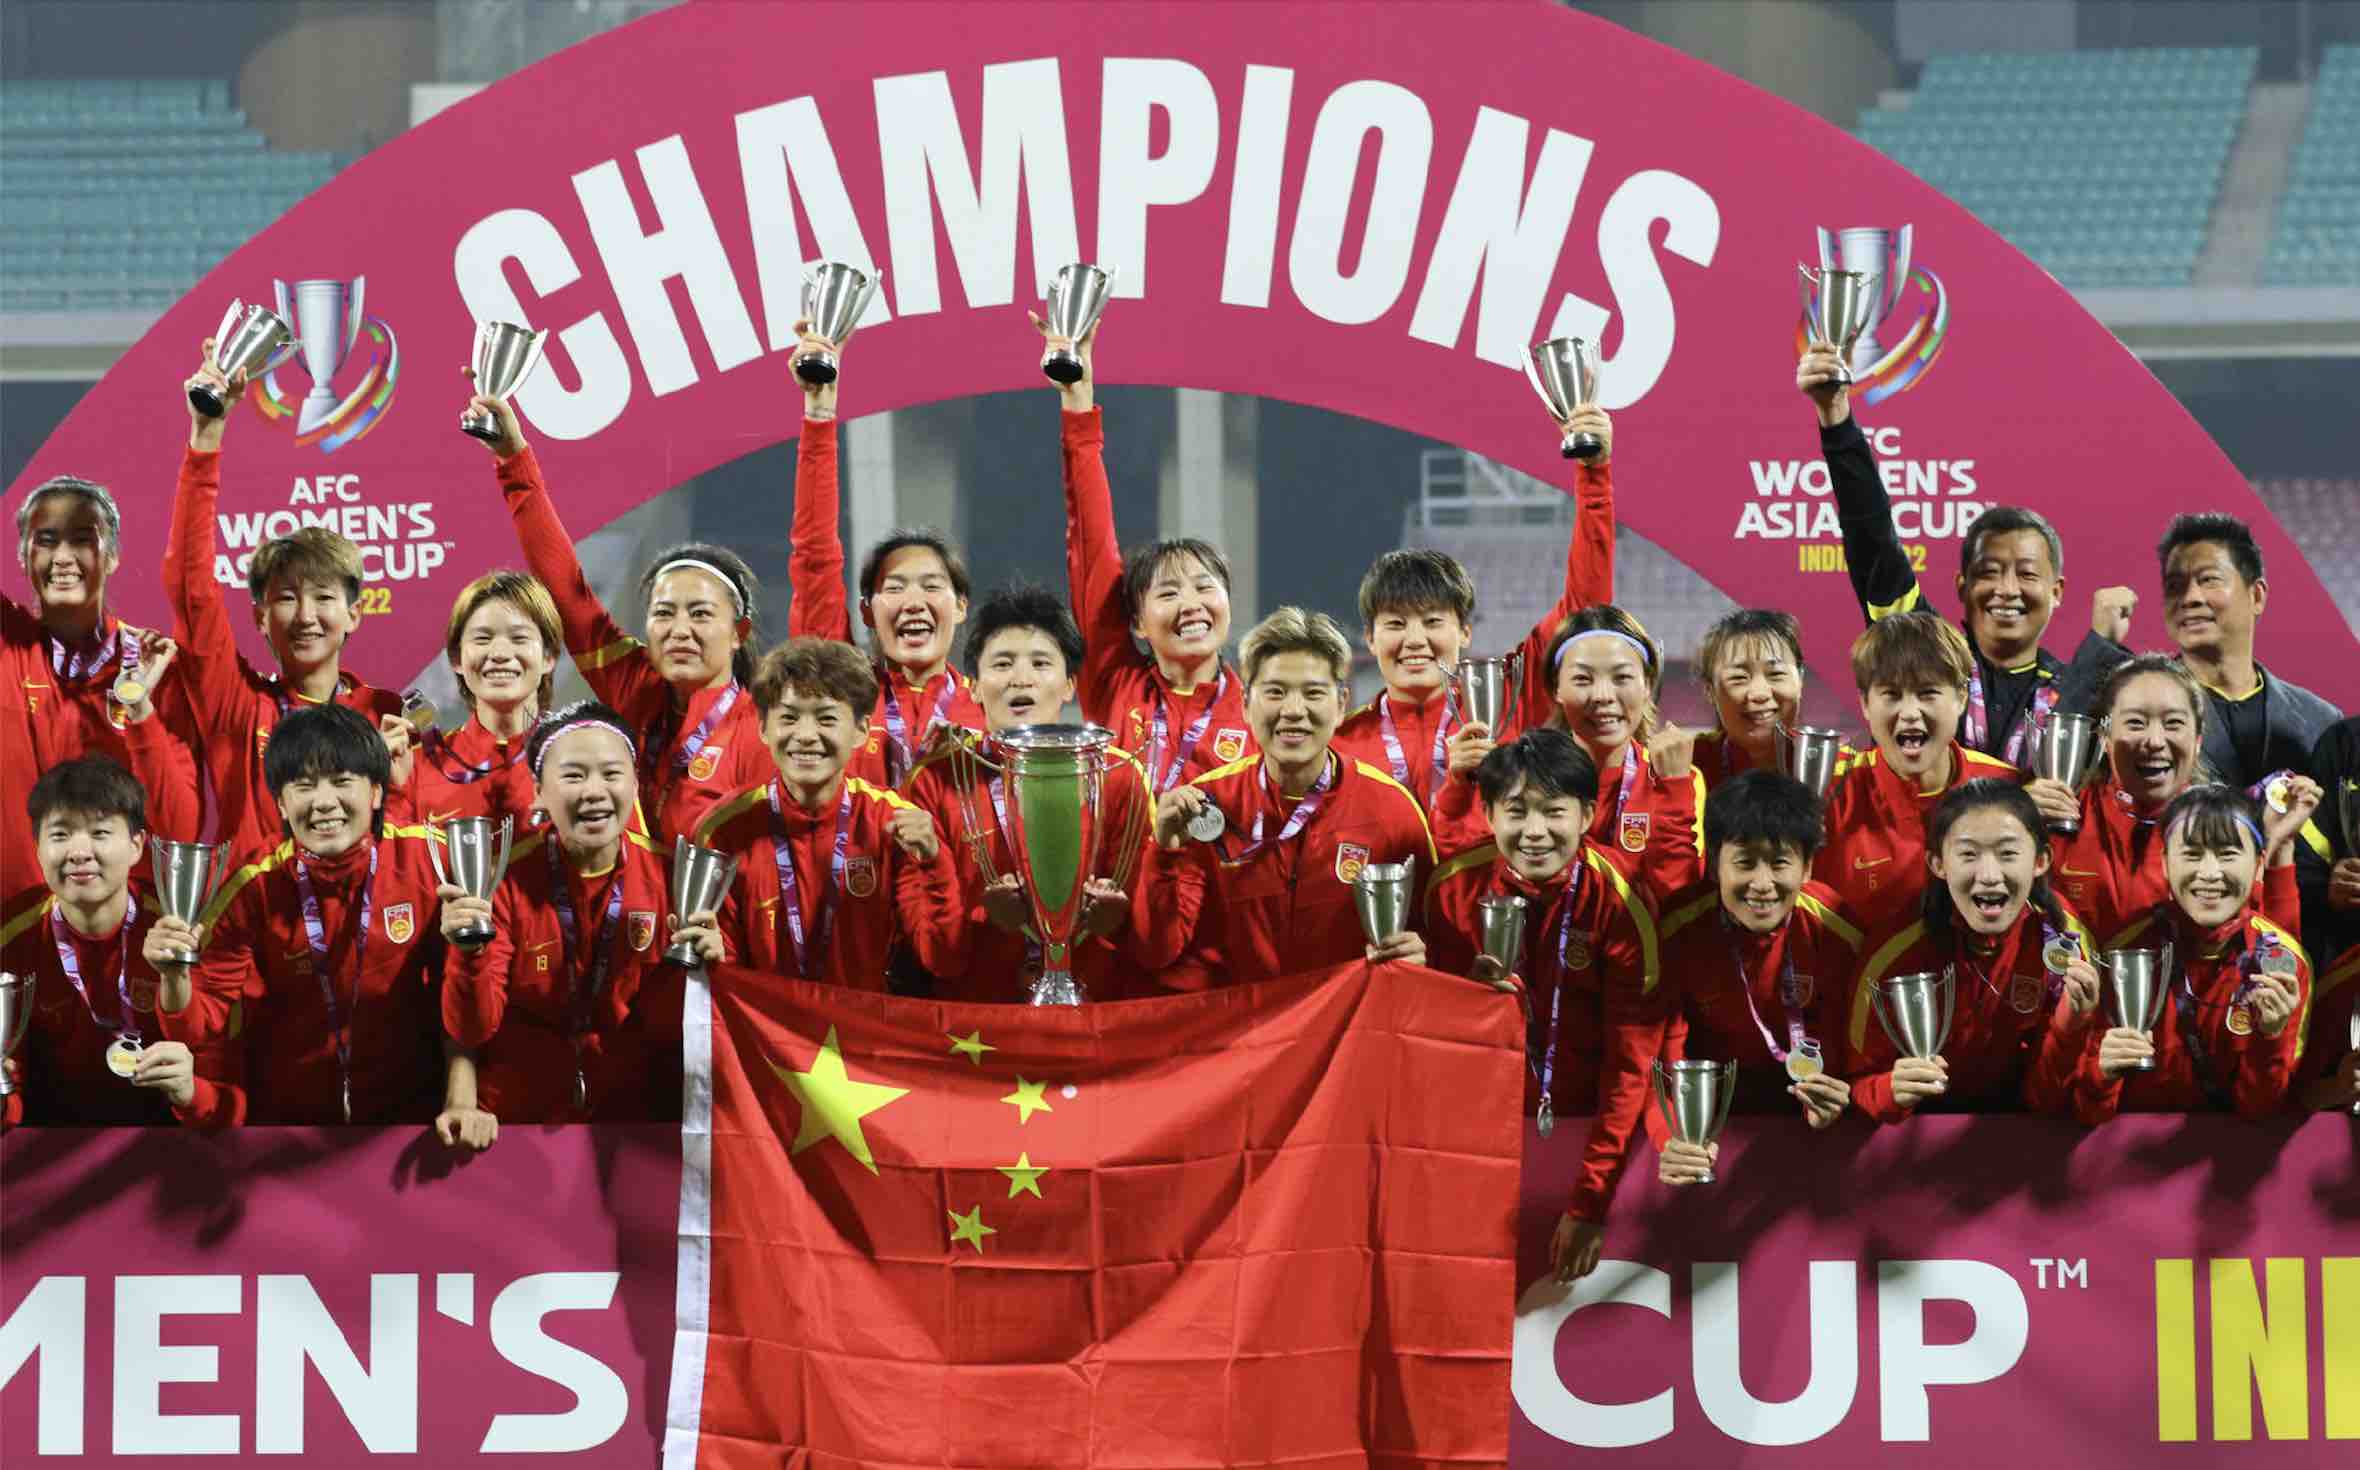 China’s Footballing Heroines Spark Debate on Equal Pay